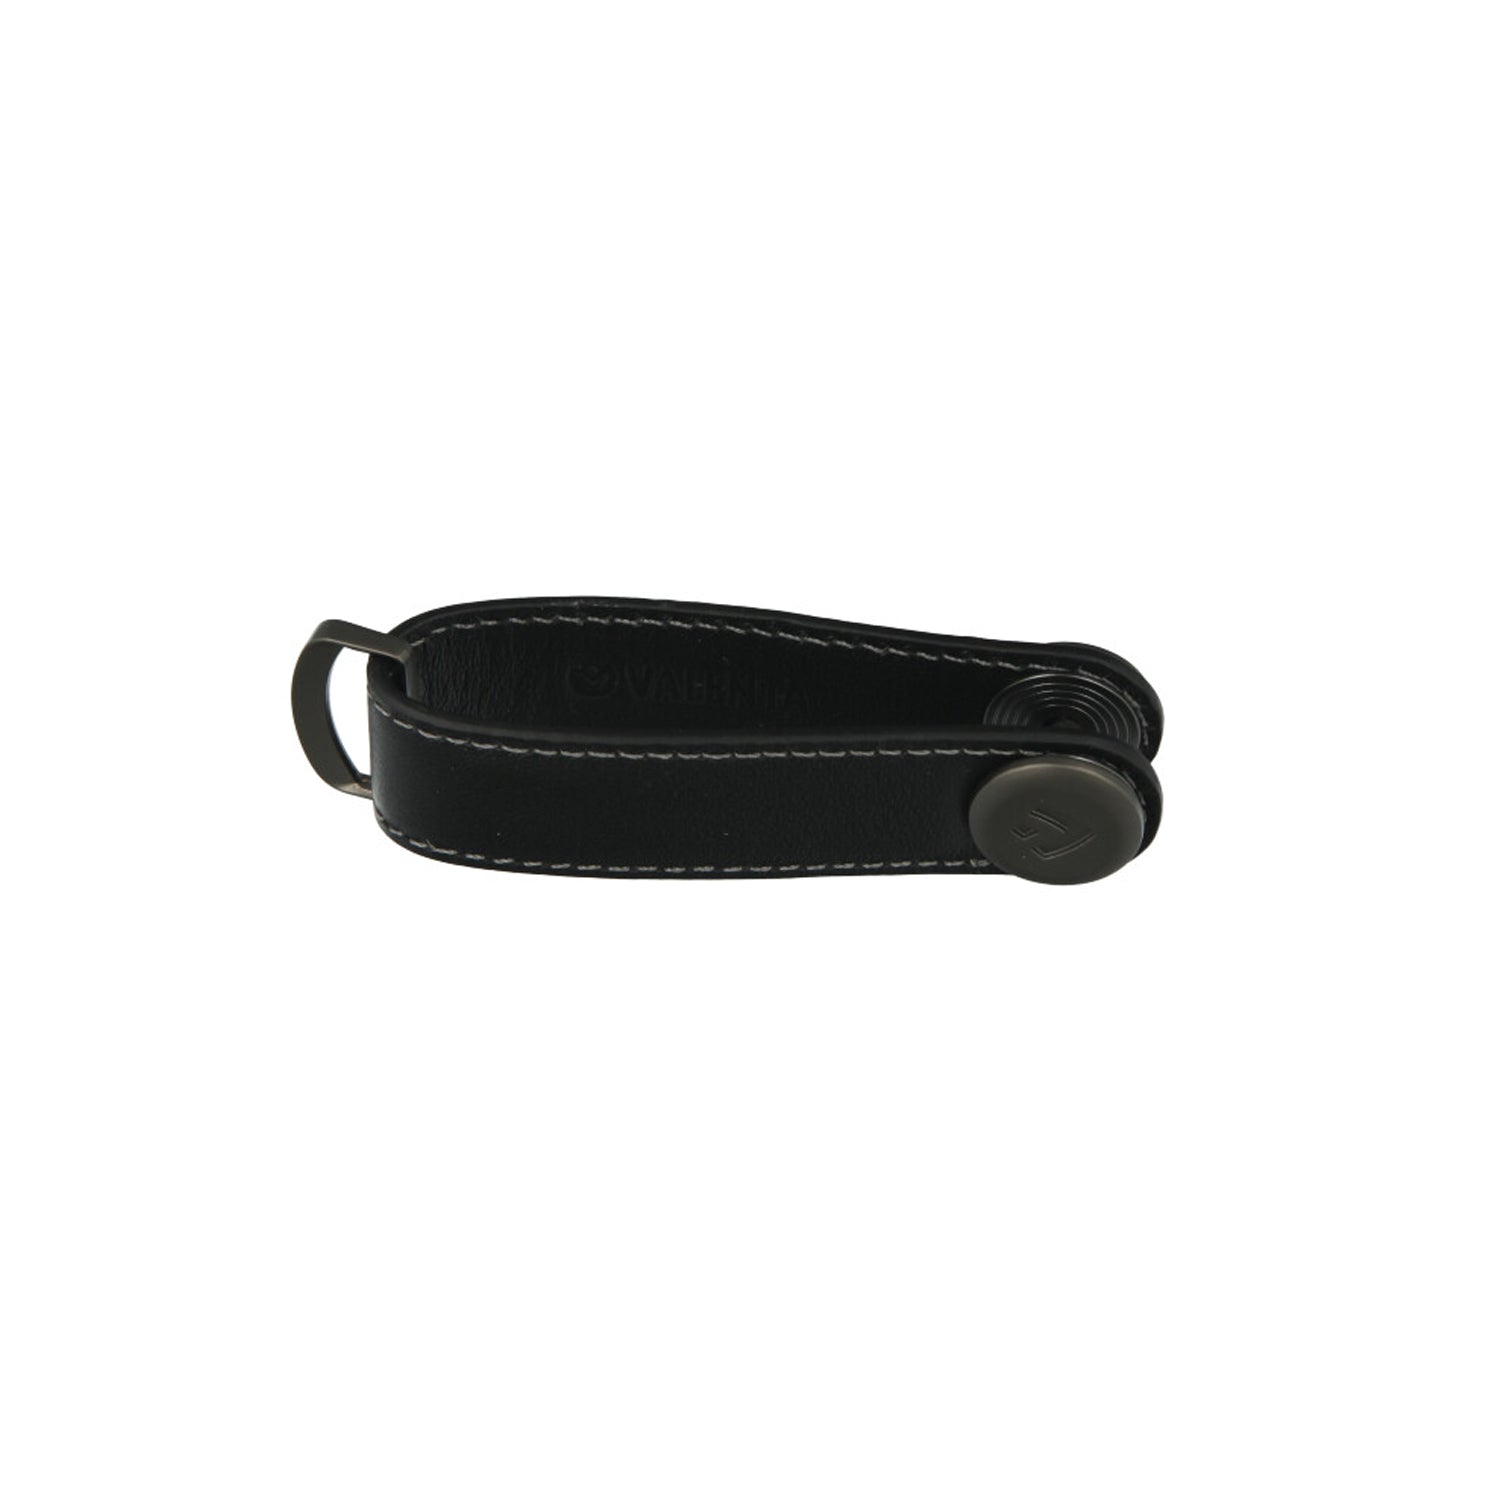 Victorinox Swiss Army knife /key leash leather lanyard scout Douk Mercator  purse - Helia Beer Co